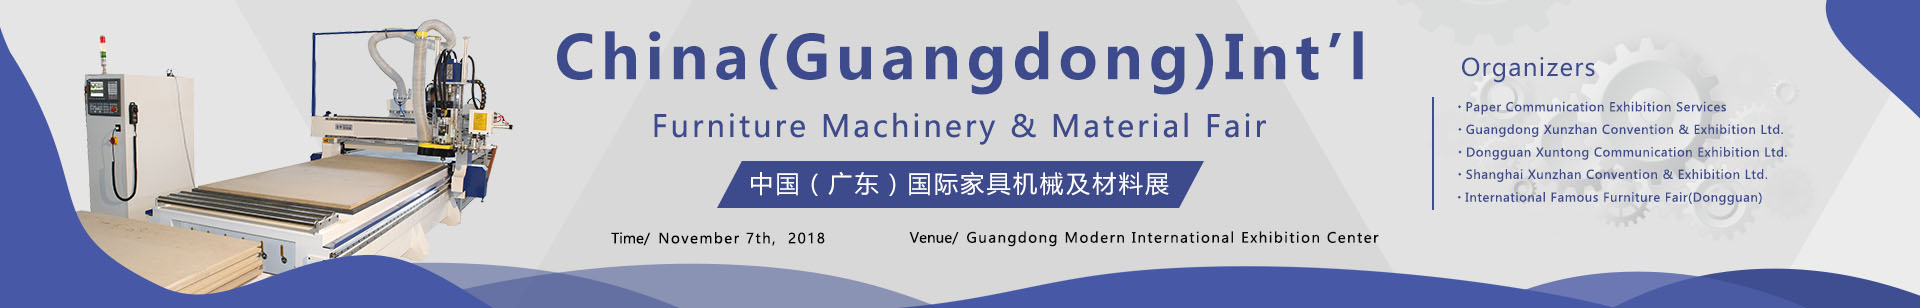 China(Guangdong)Int’l Furniture Machinery & Material Fair